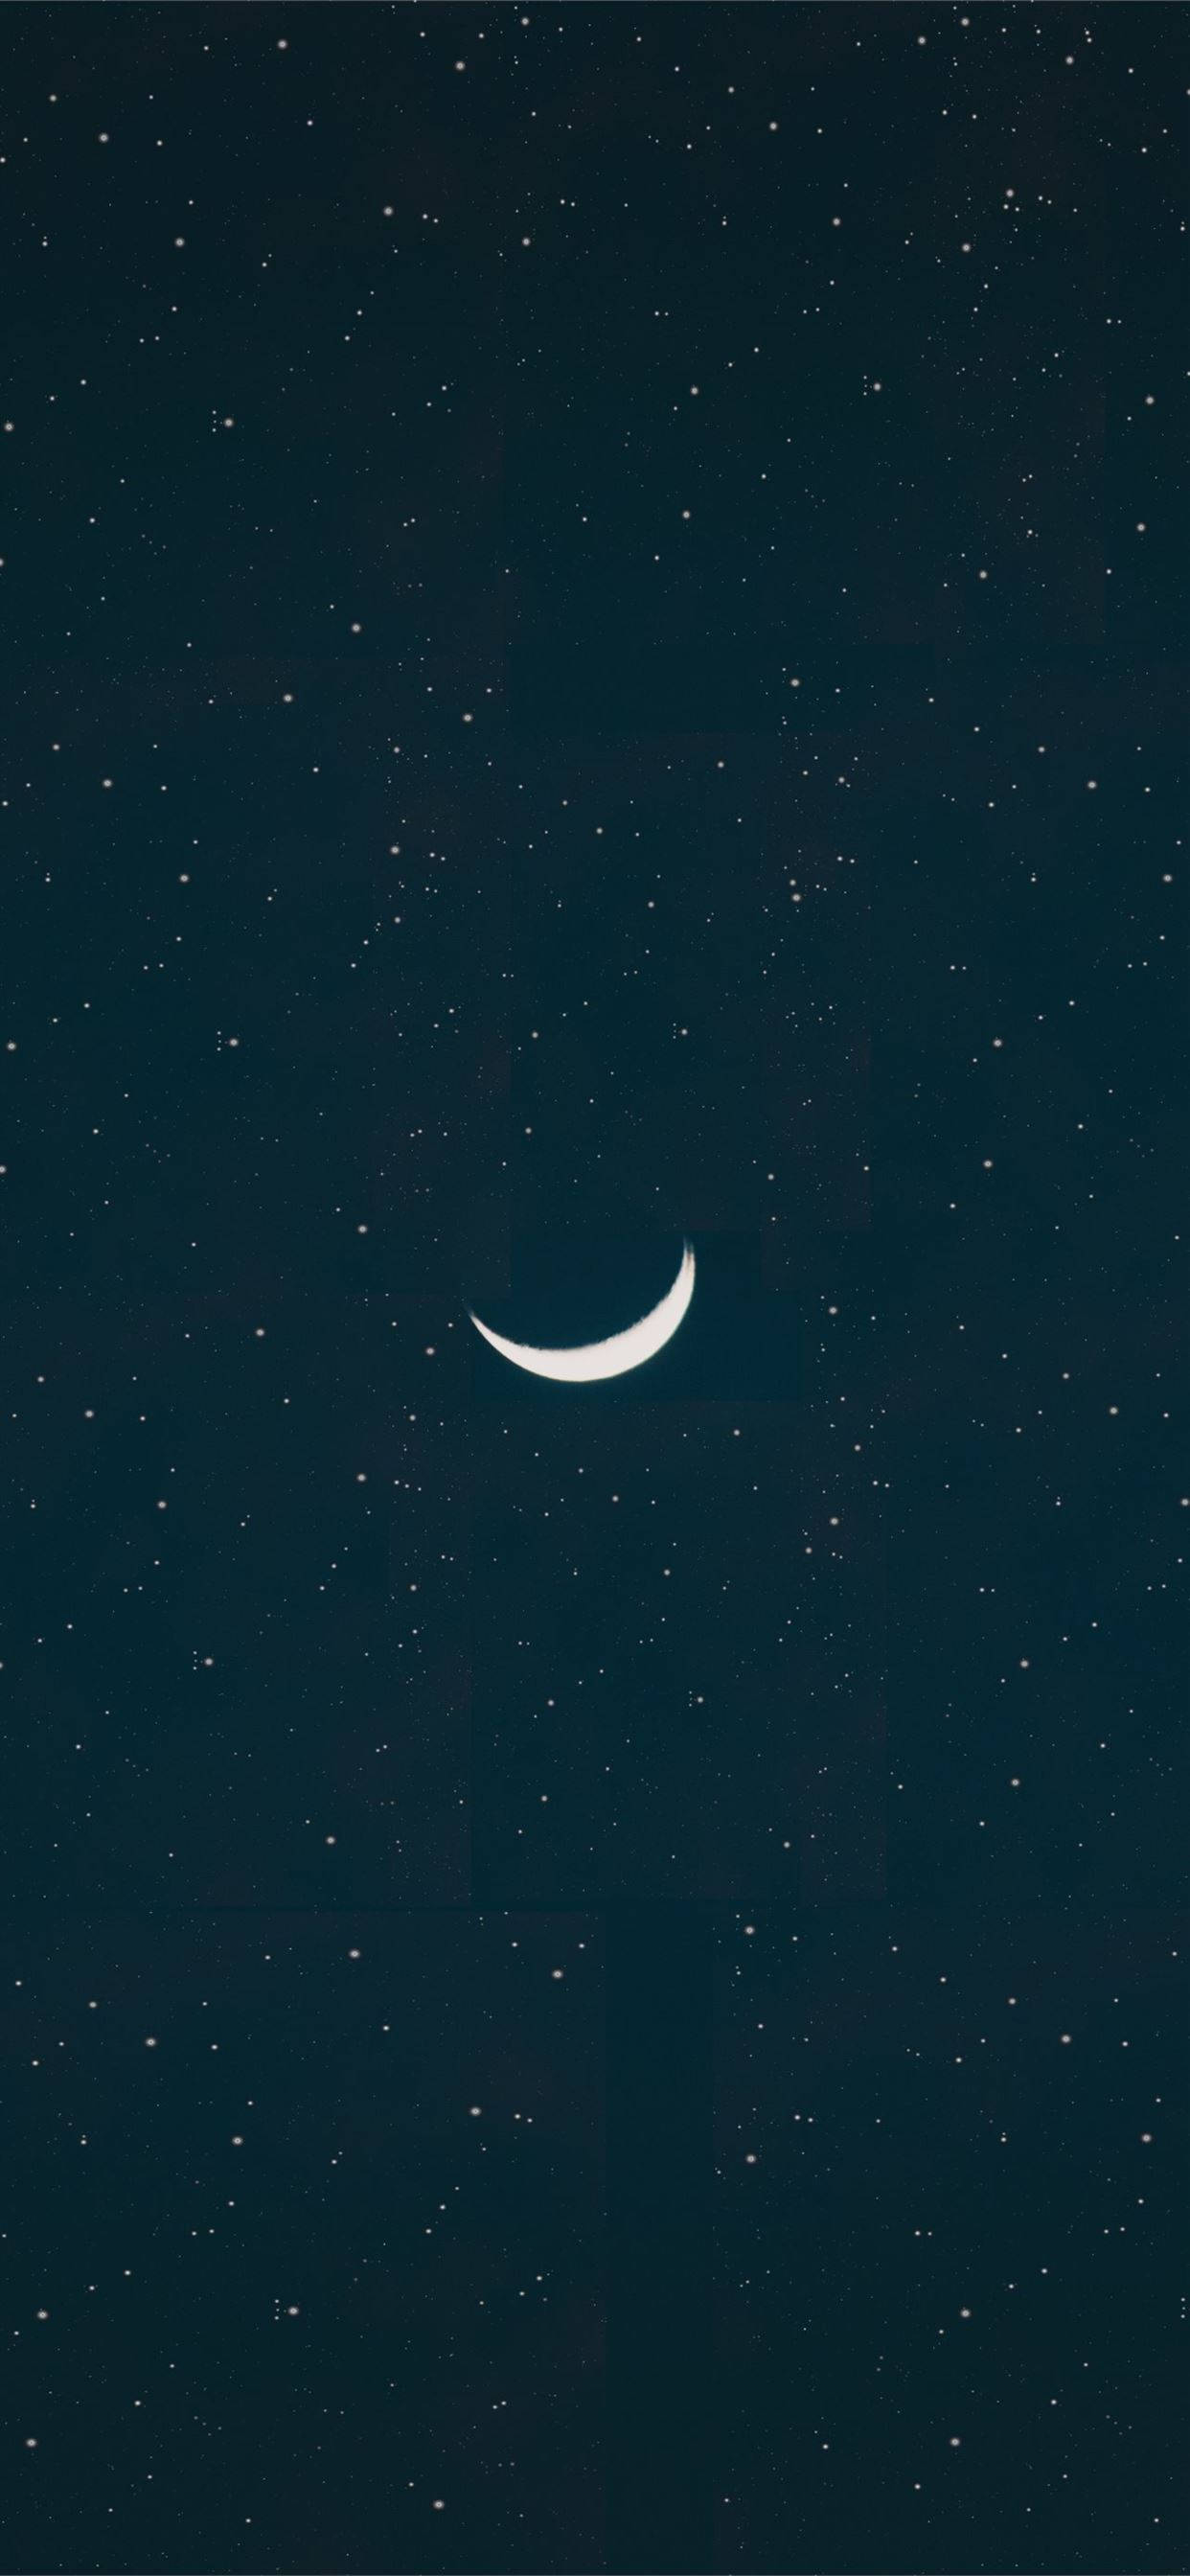 Aesthetic iPhone X Crescent Moon Wallpaper